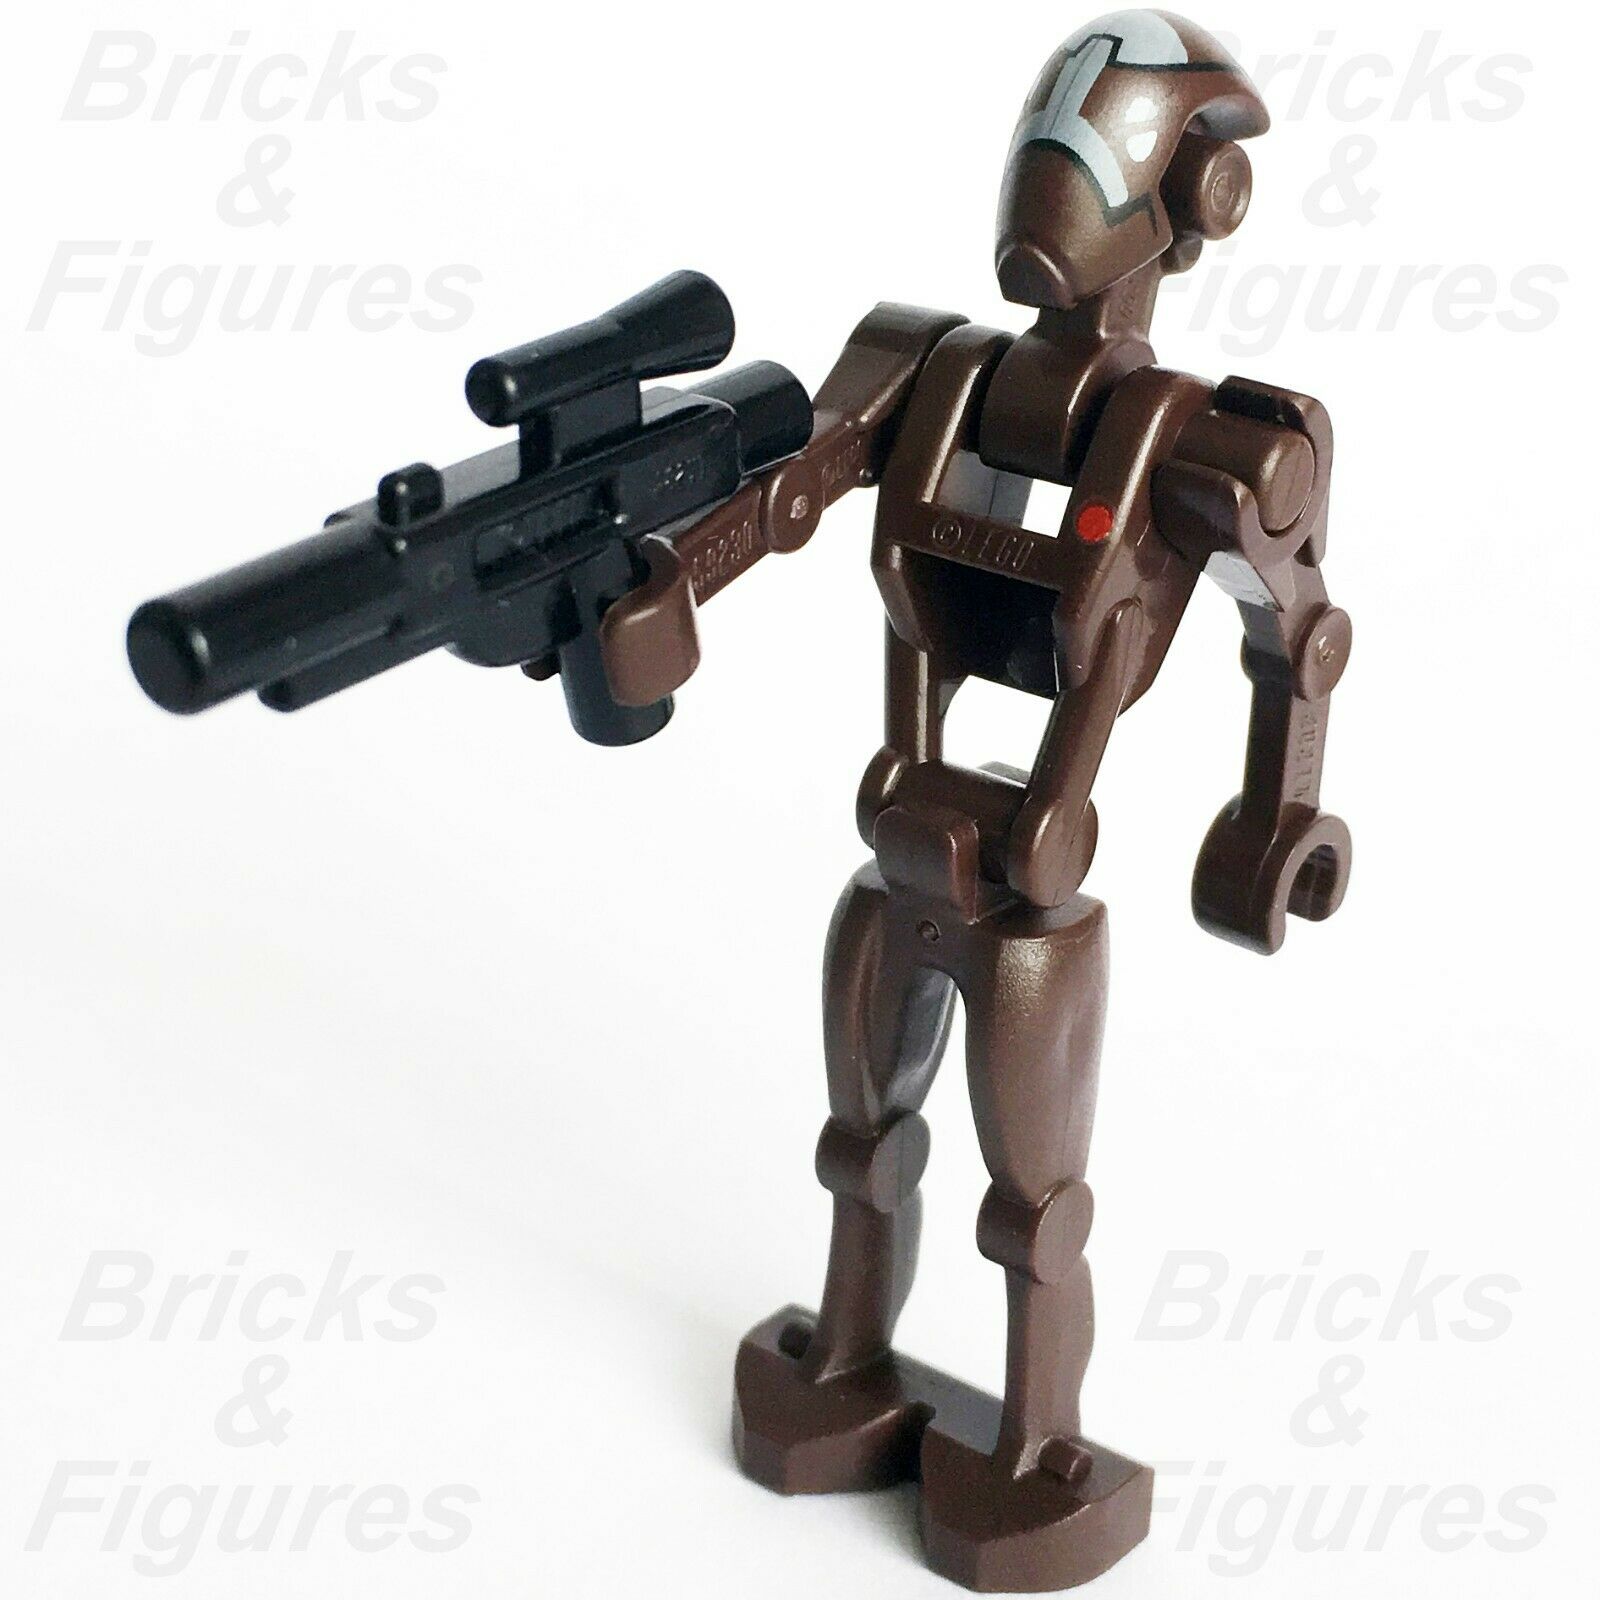 New Star Wars LEGO Elite Commando Droid Captain Minifigure from set 75002 - Bricks & Figures